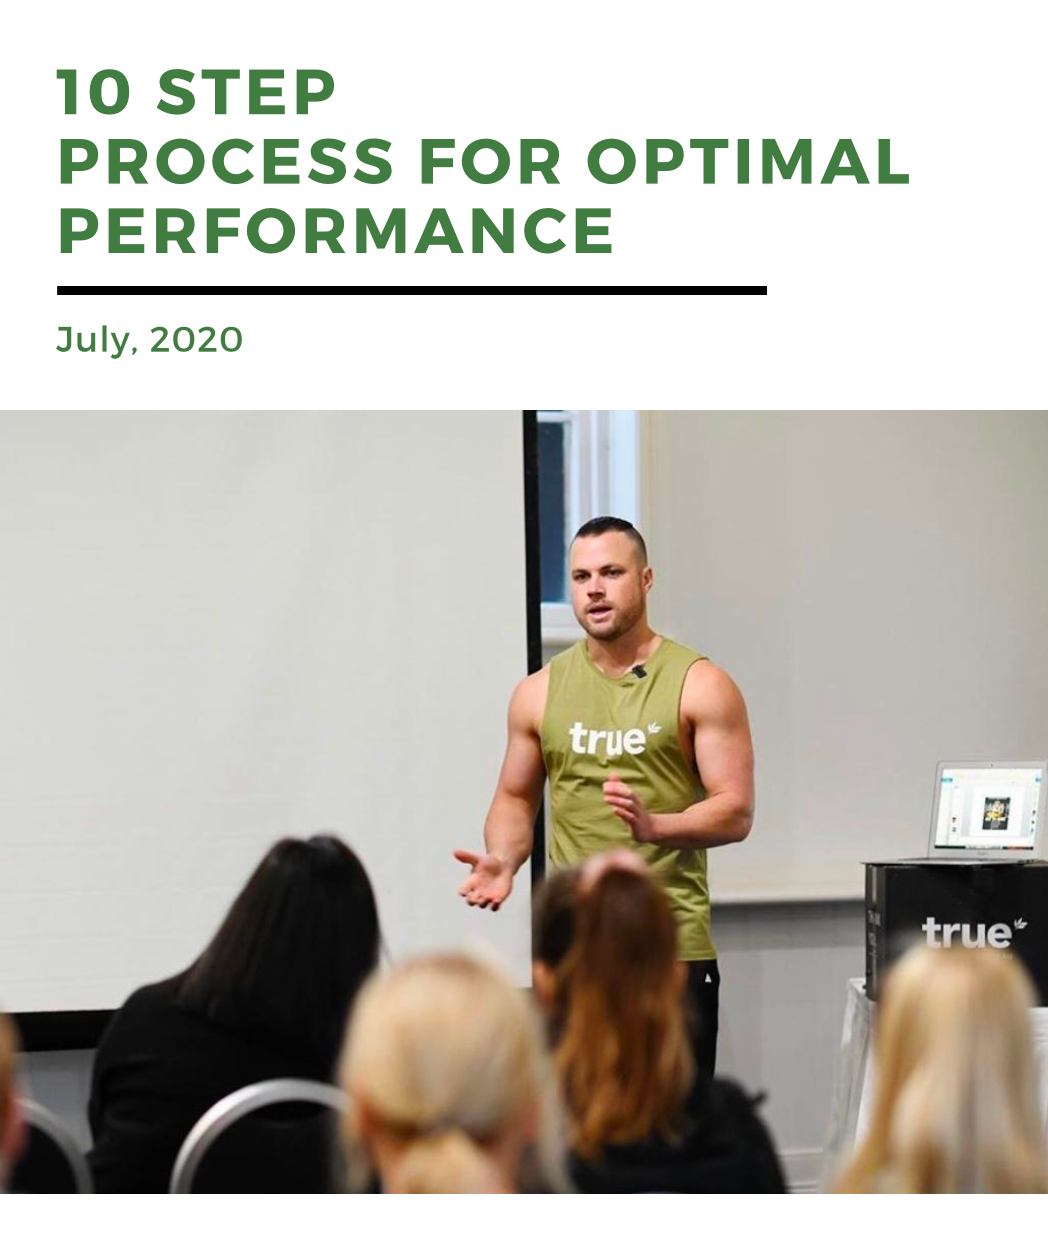 10 steps to optimal performance